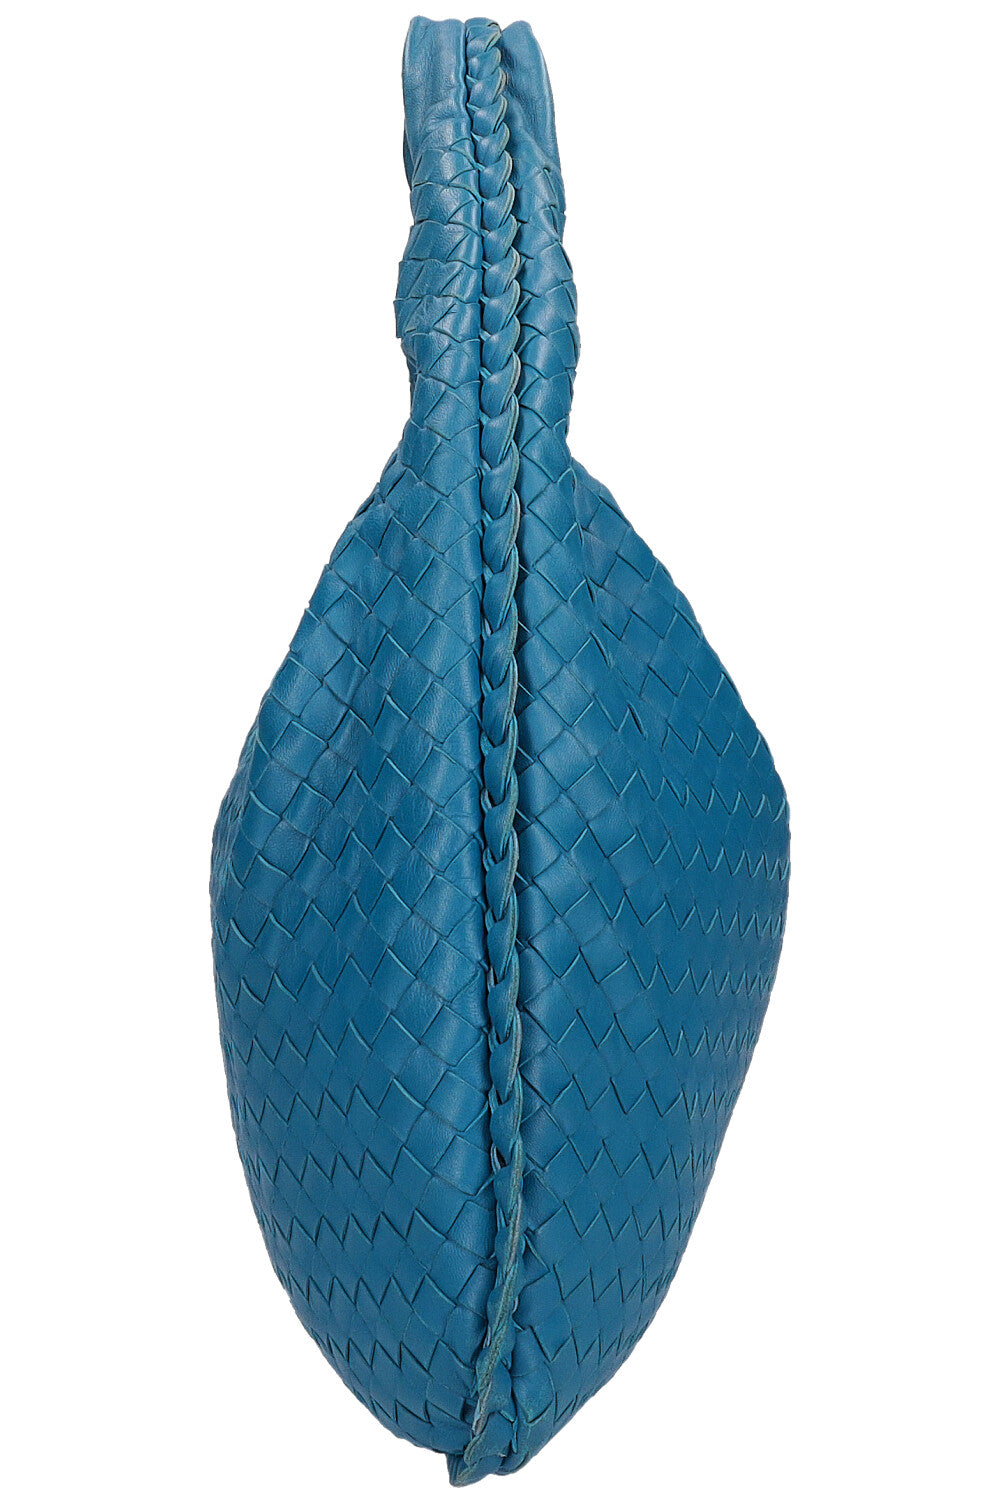 BOTTEGA VENETA Small Hobo Veneta Bag Intrecciato Blue